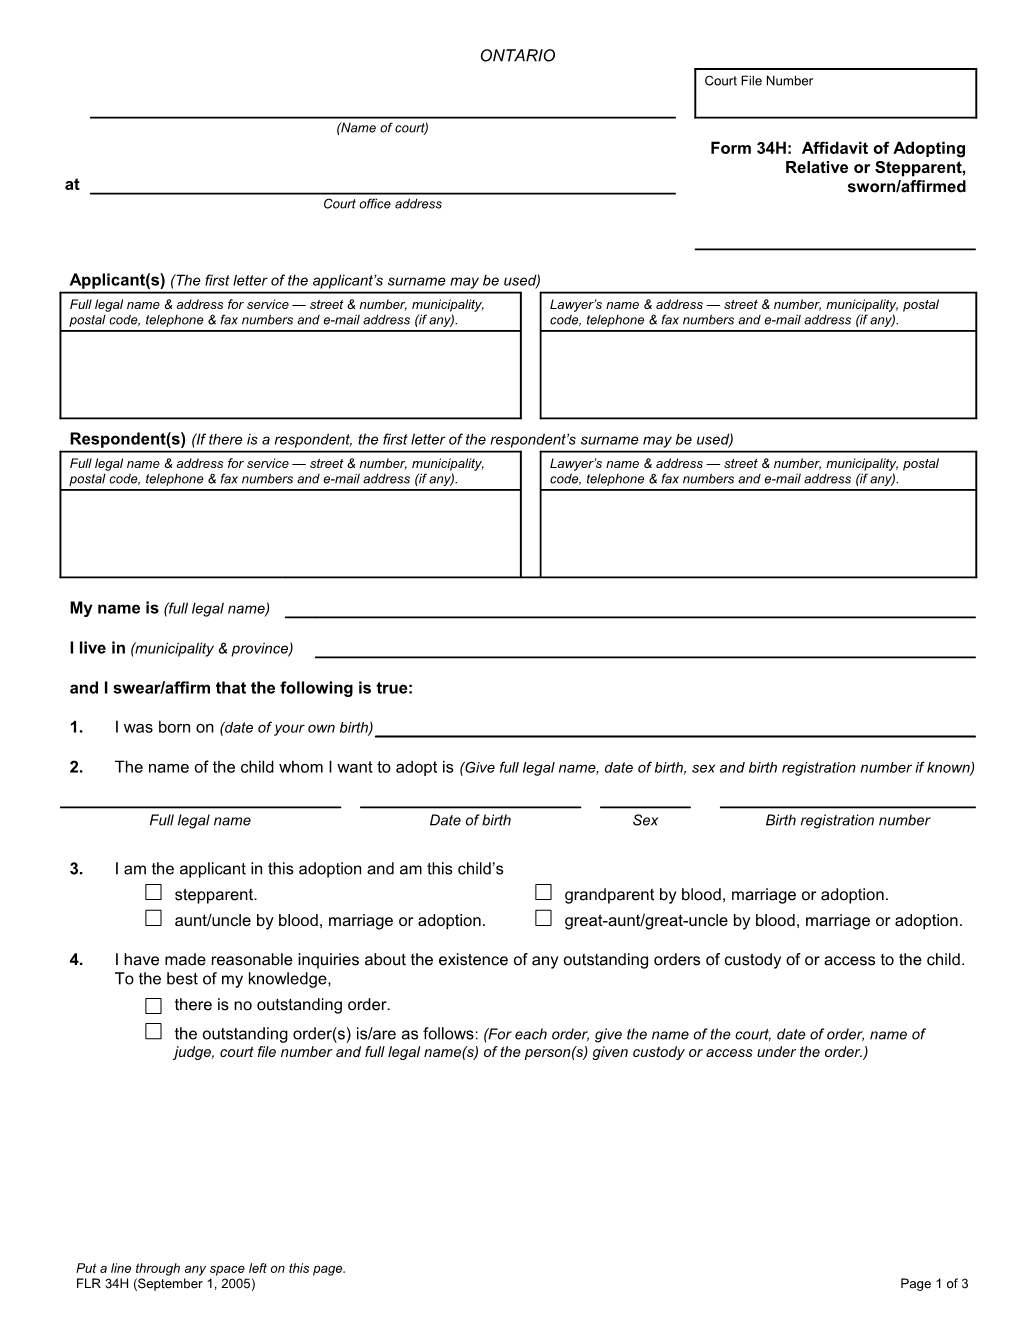 Form 34H Affidavit of Adopting Relative Or Stepparent